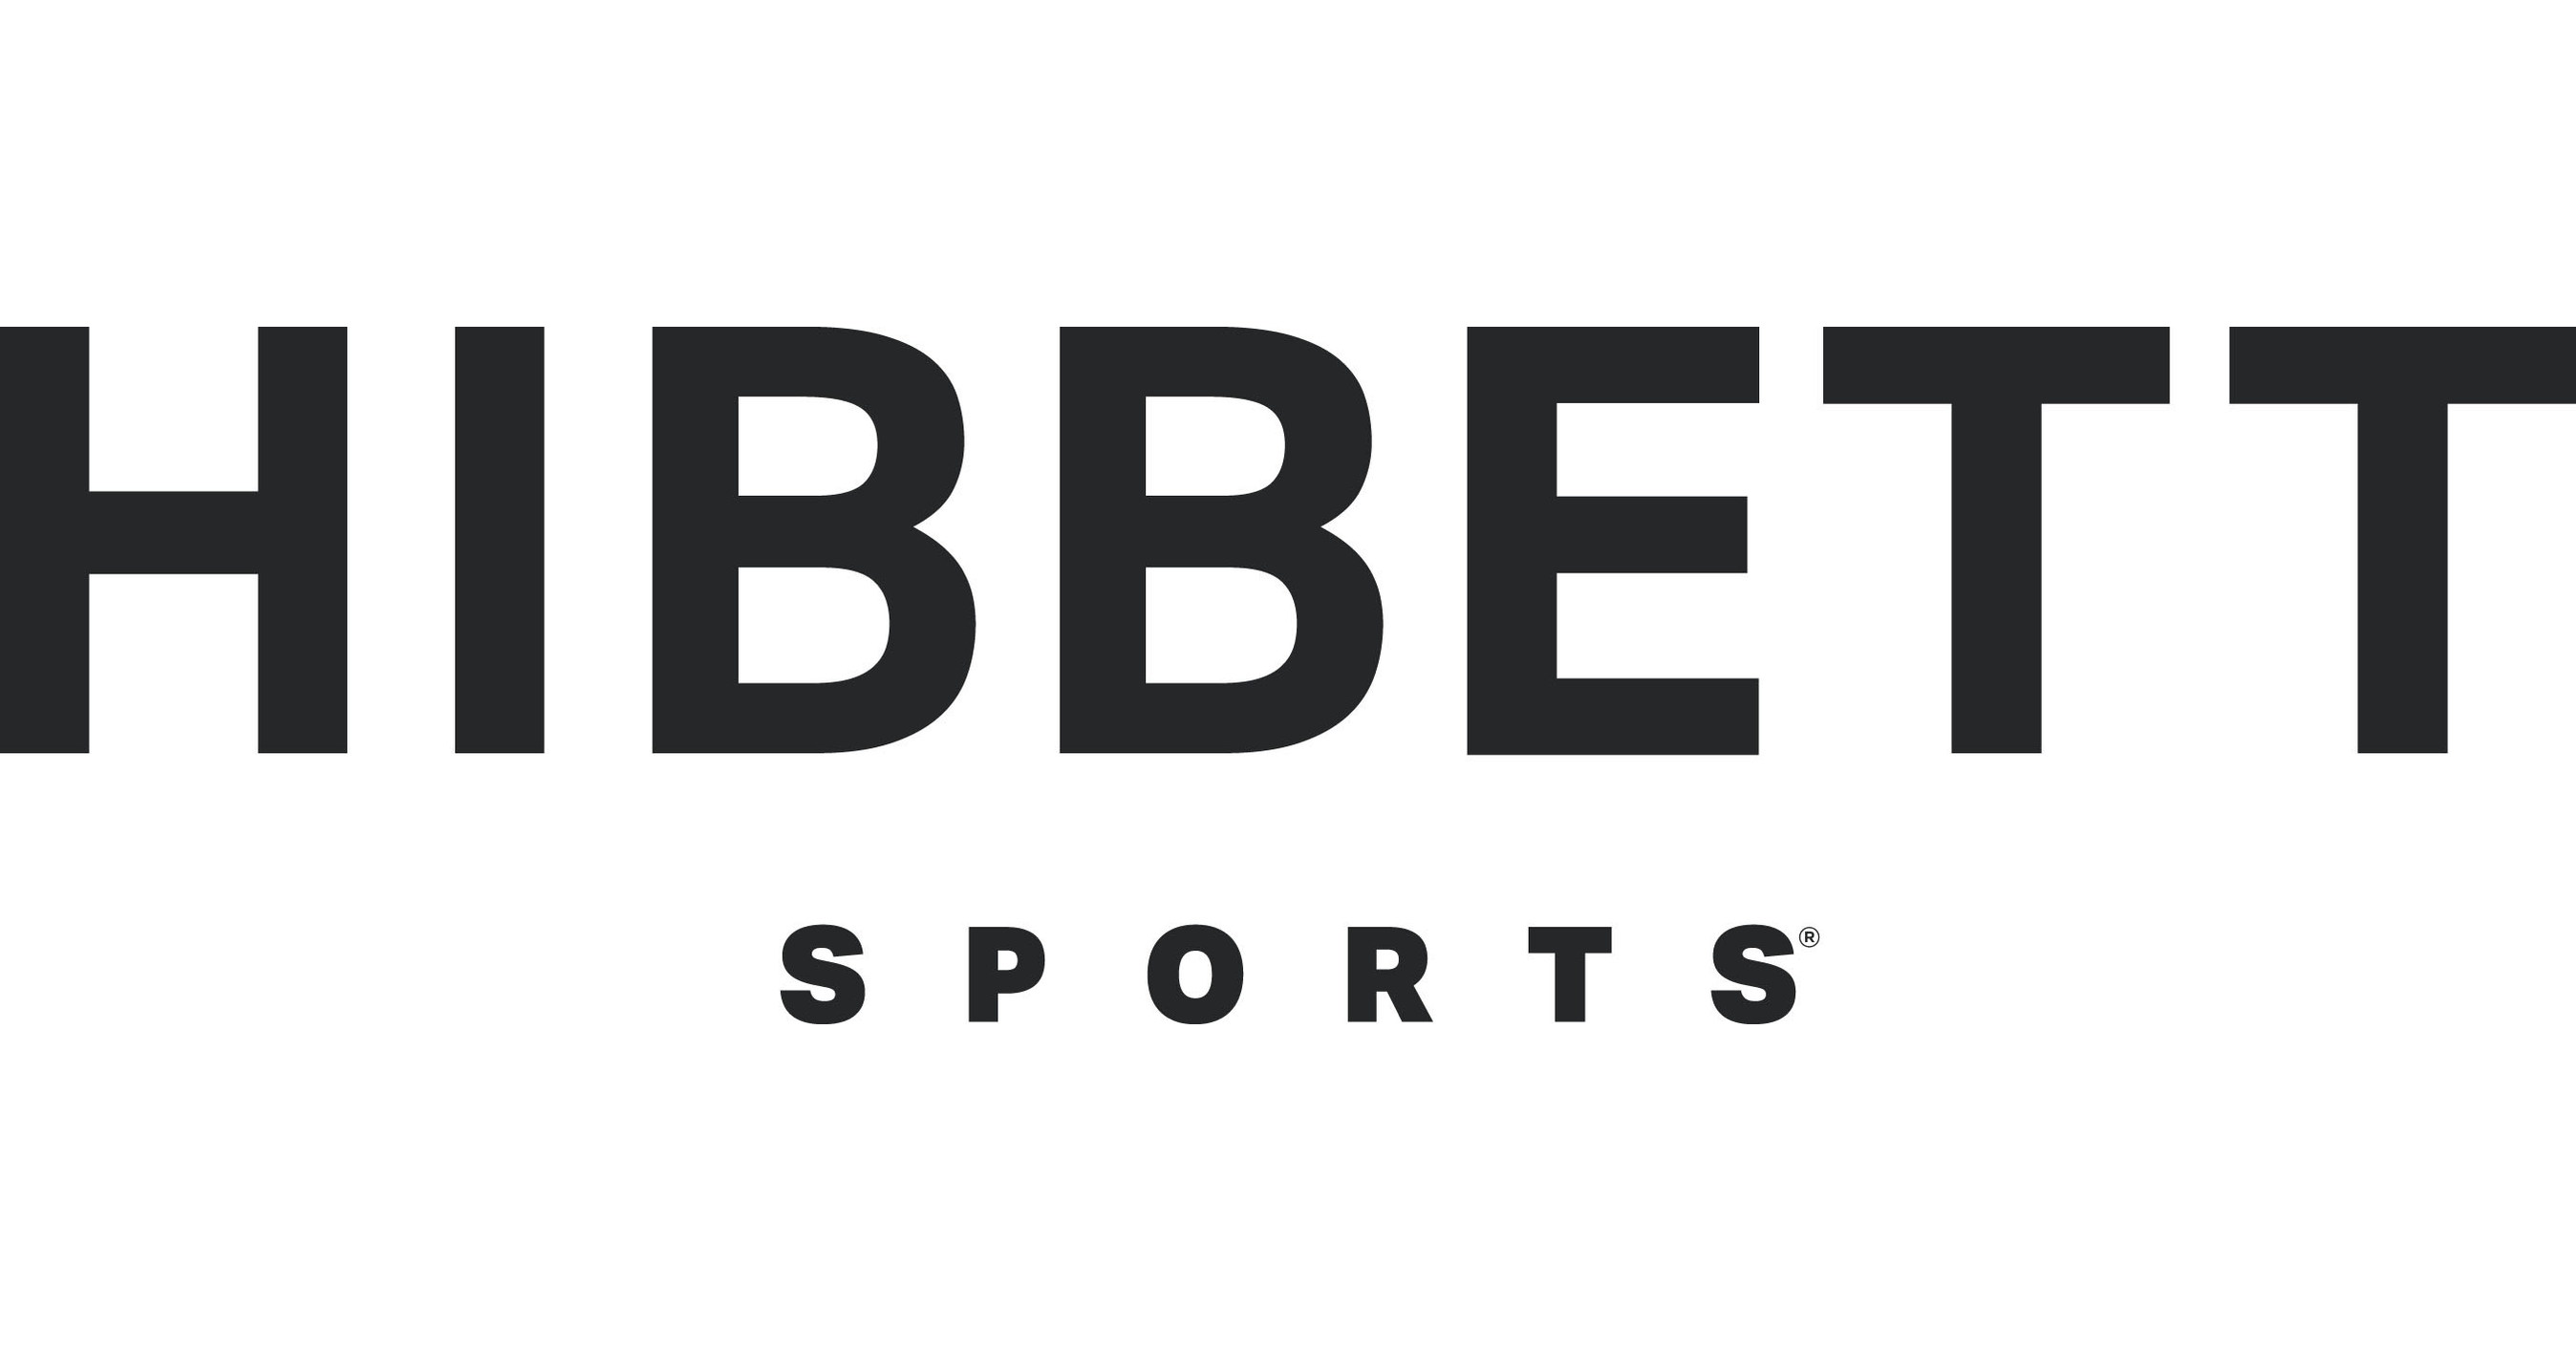 Hibbett Sports.